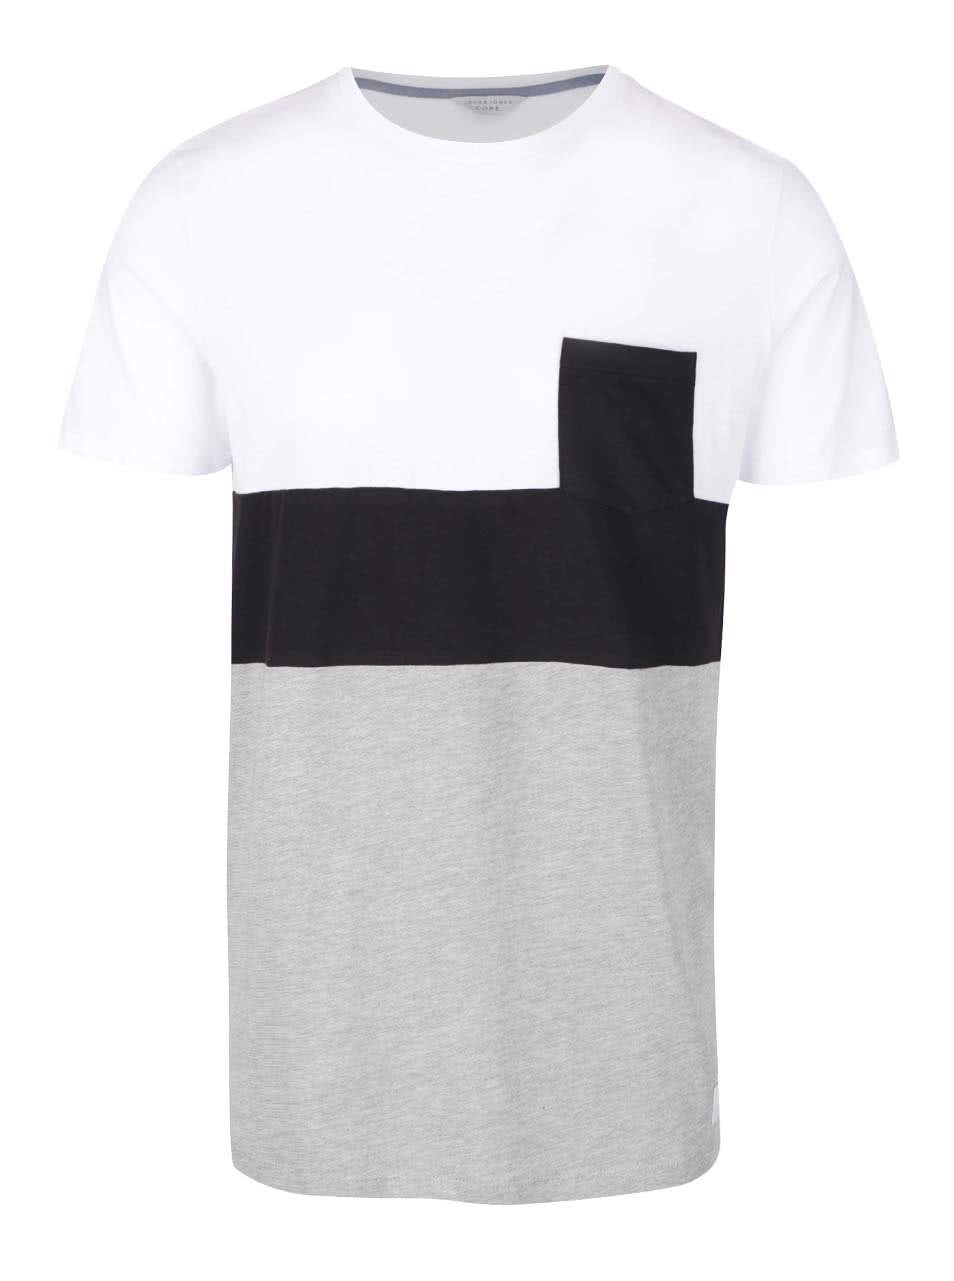 Šedo-černo-bílé triko s kapsou Jack & Jones Blocks